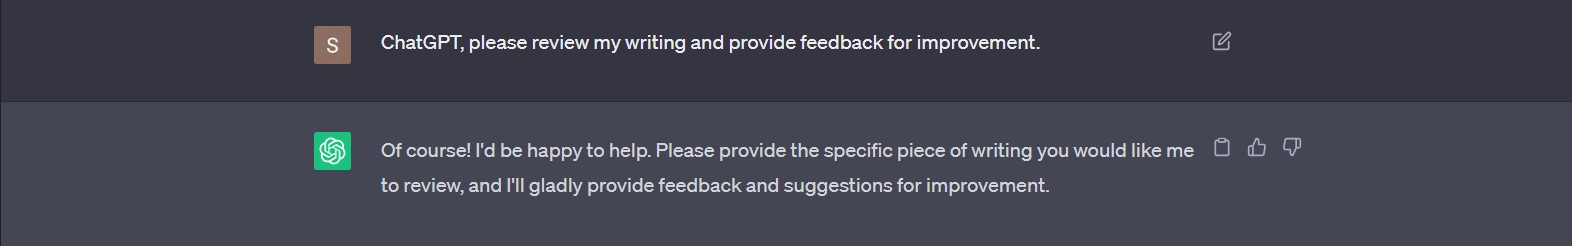  risposta immediata di ChatGPT al feedback